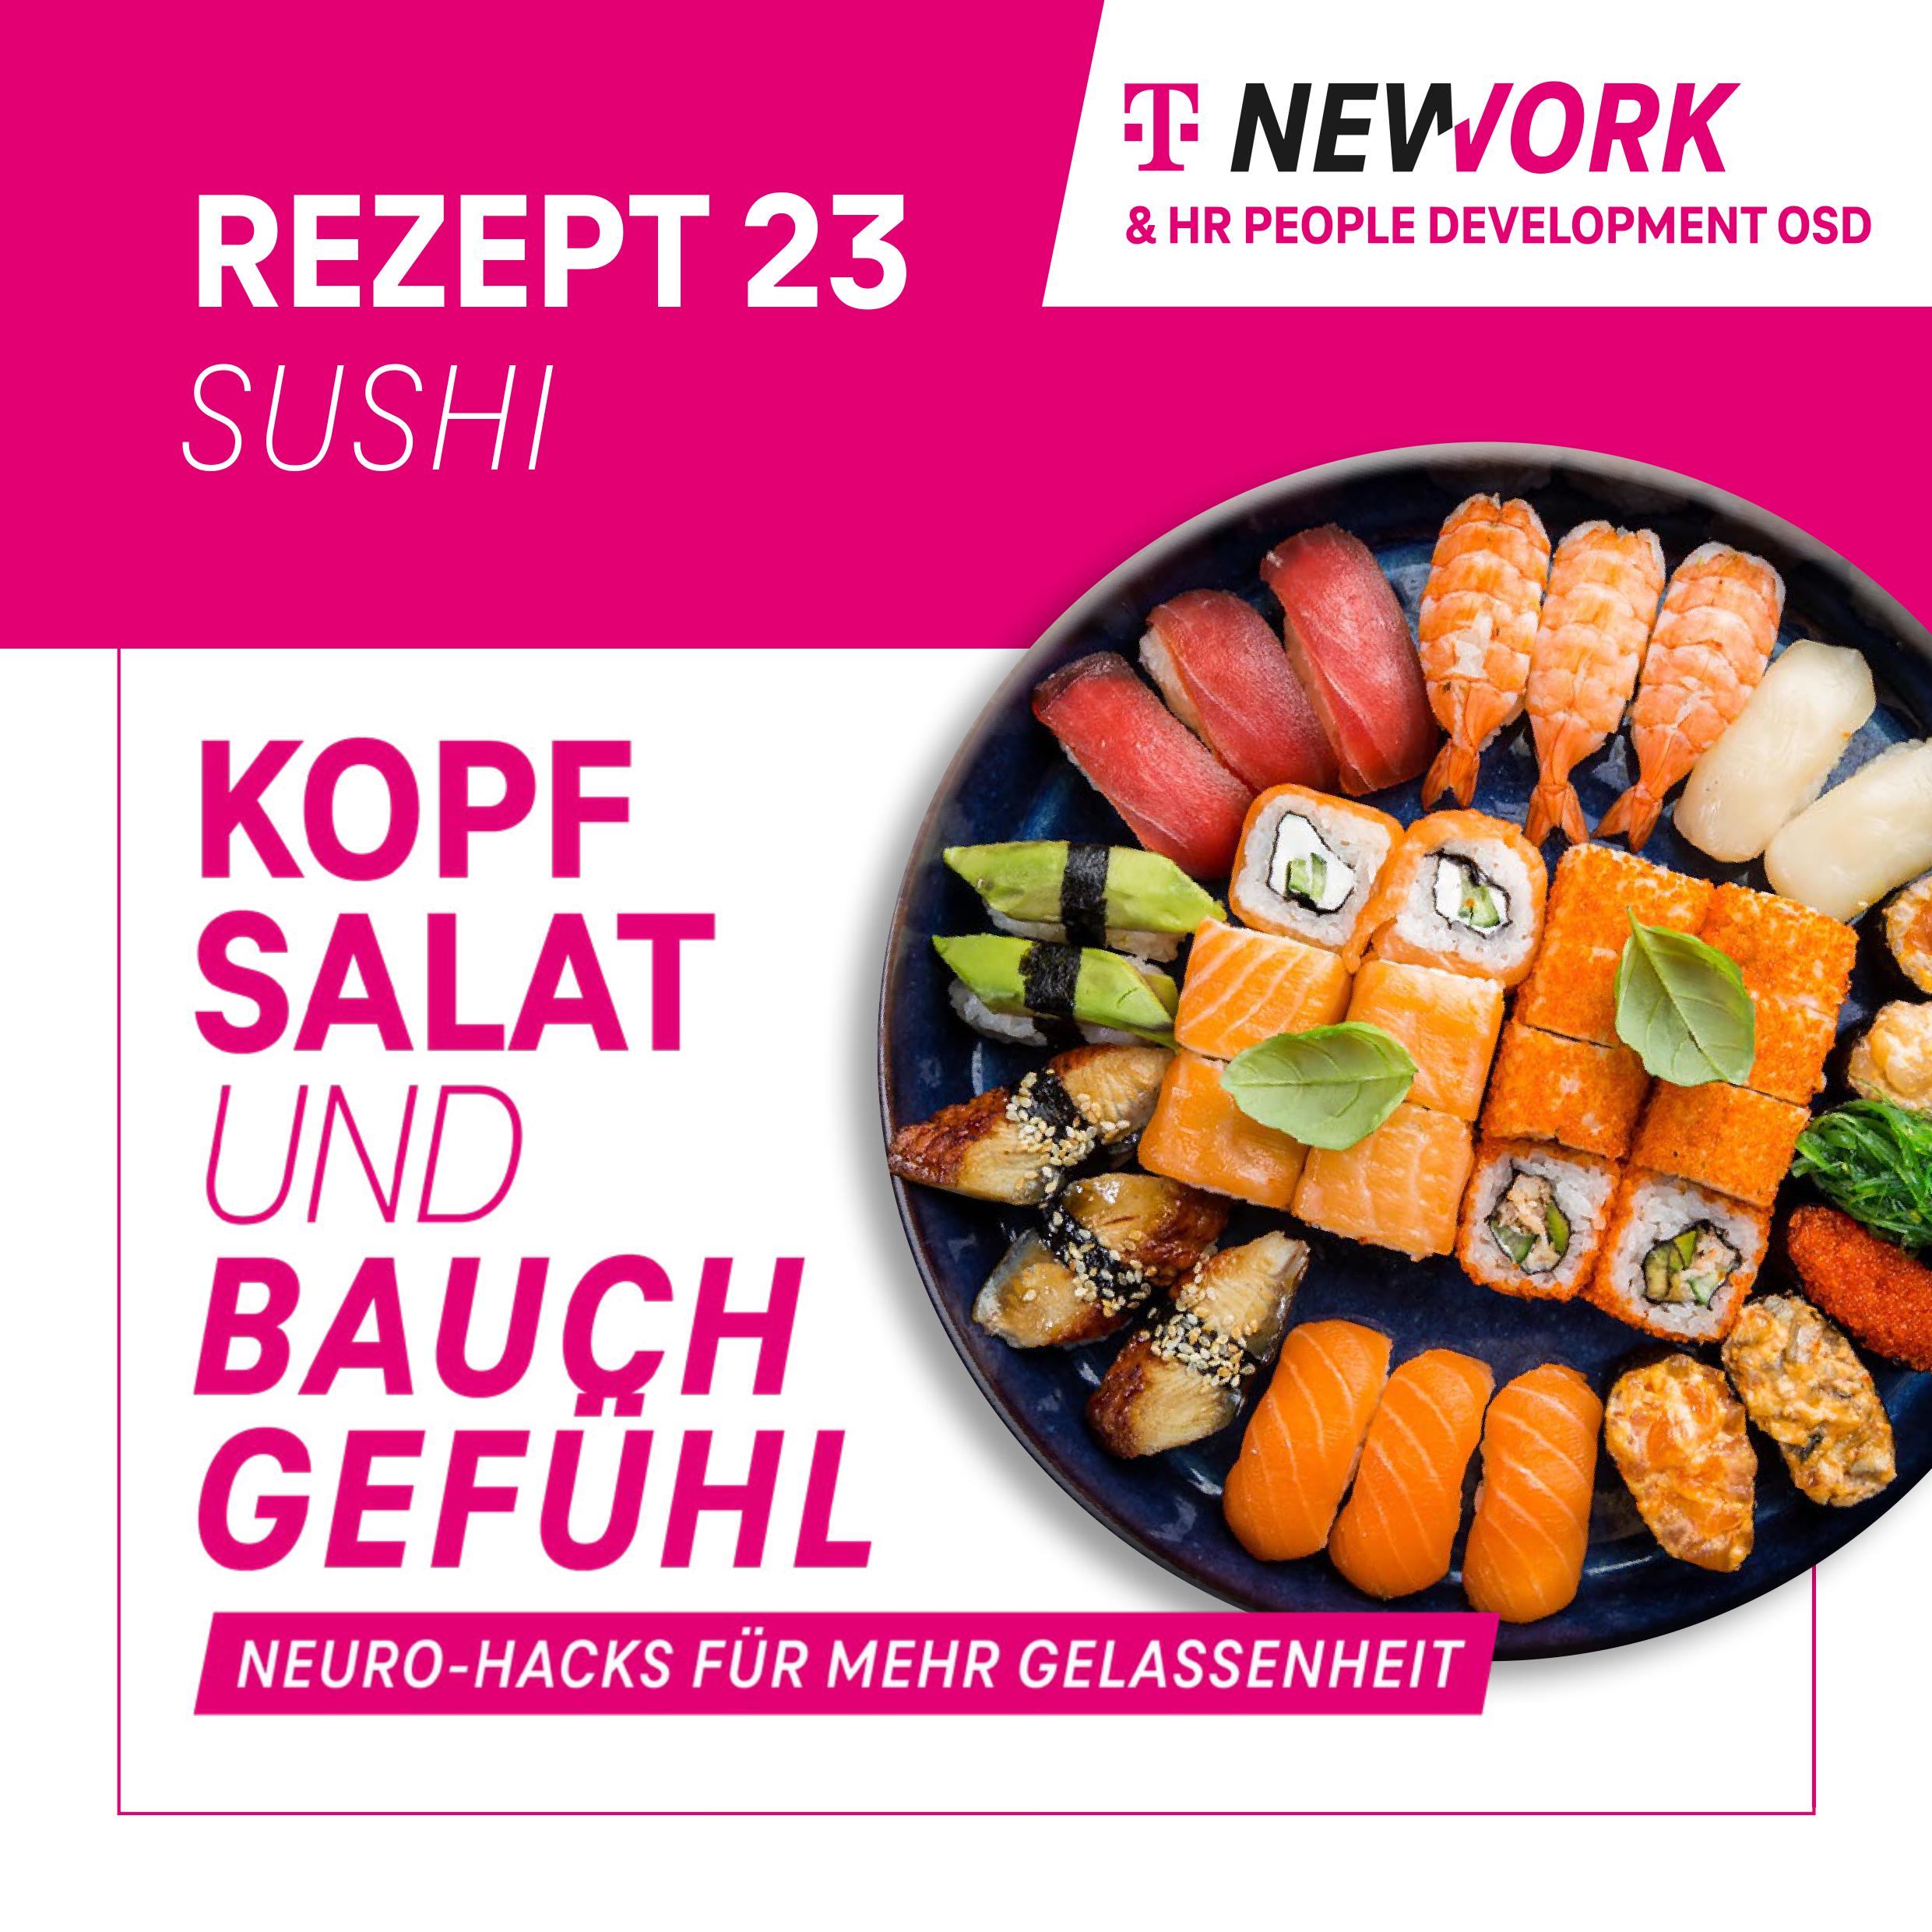 Kopfsalat und Bauchgefühl Rezept 23 Sushi